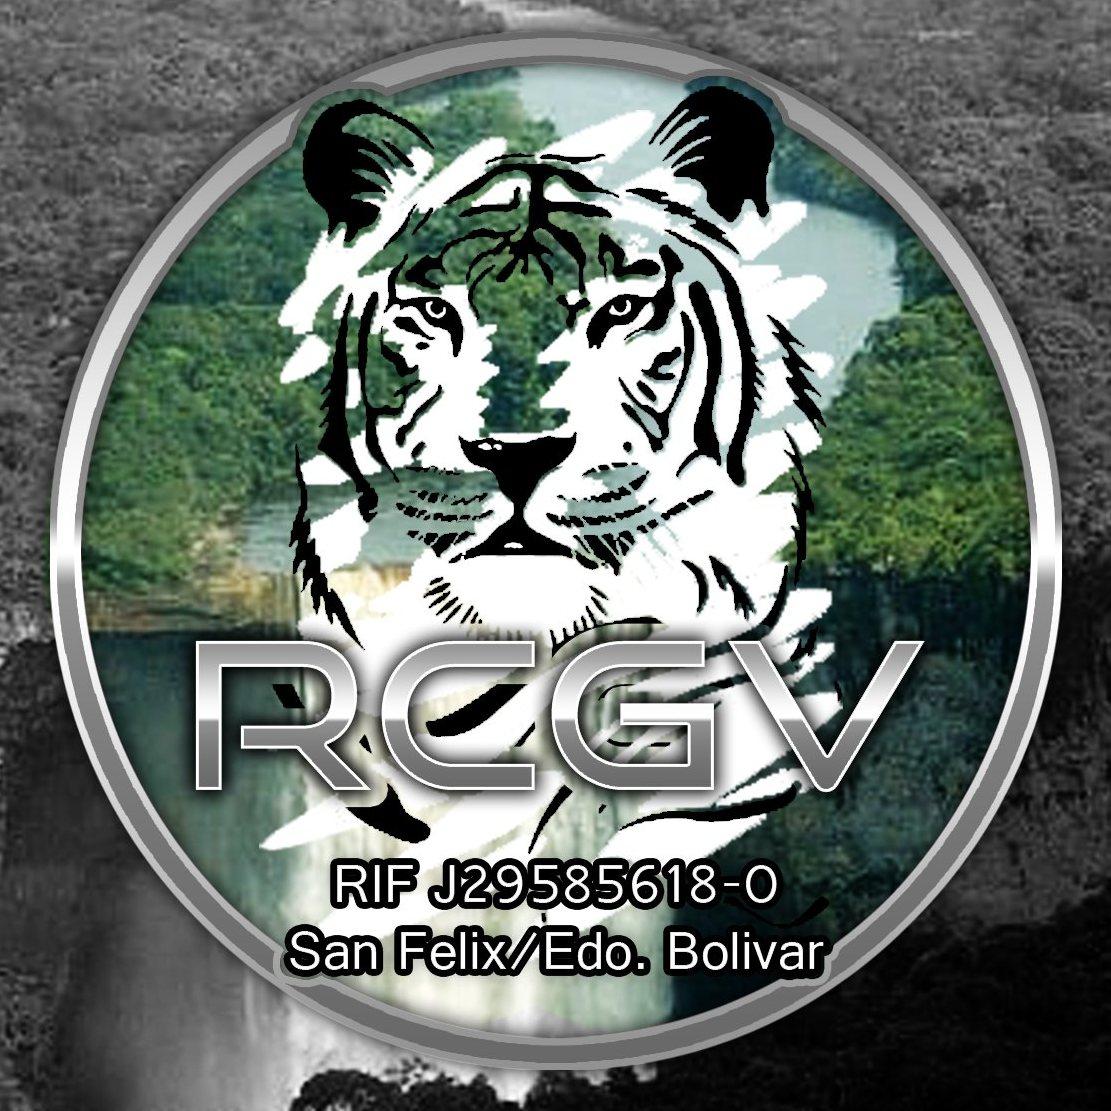 The RCGV logo